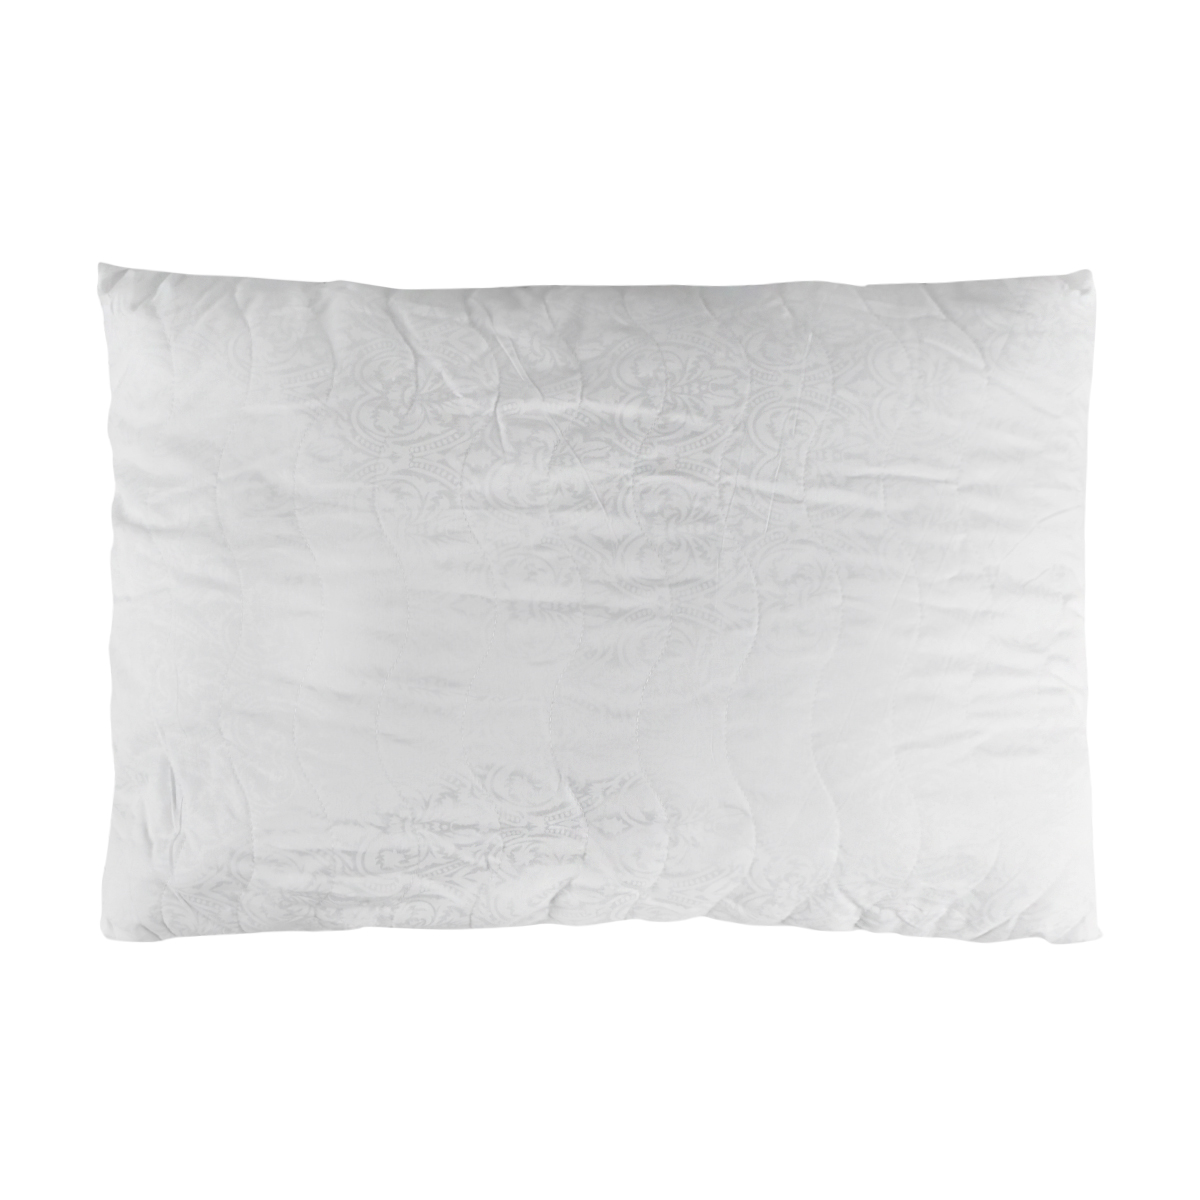 Подушка новолон  50*70 см, чехол полиэстер (5)